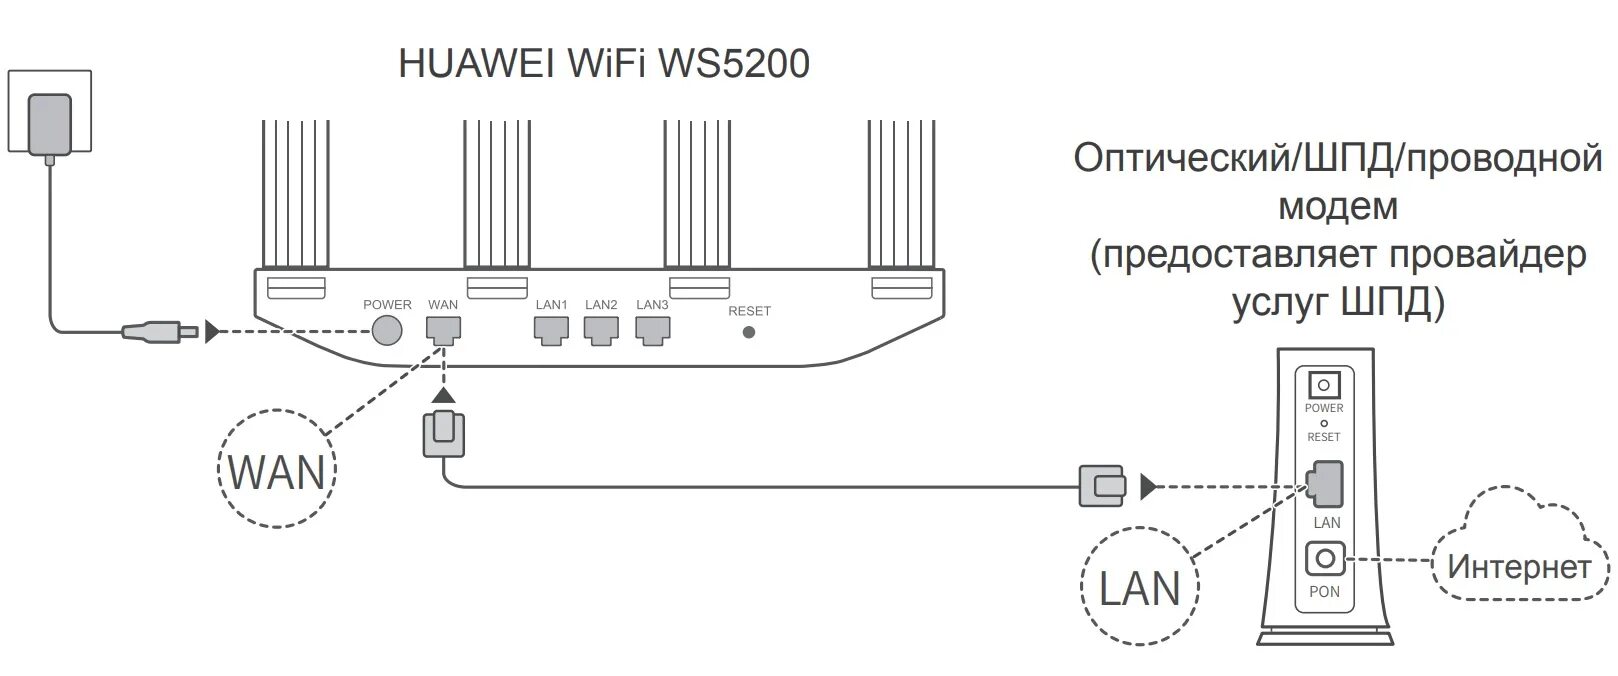 Как подключить роутер хуавей. Huawei WIFI ws5200. Wi-Fi роутер Huawei ax2 ws7001. Wi-Fi роутер Huawei ws5200 v3. Схема подключения роутер Huawei.